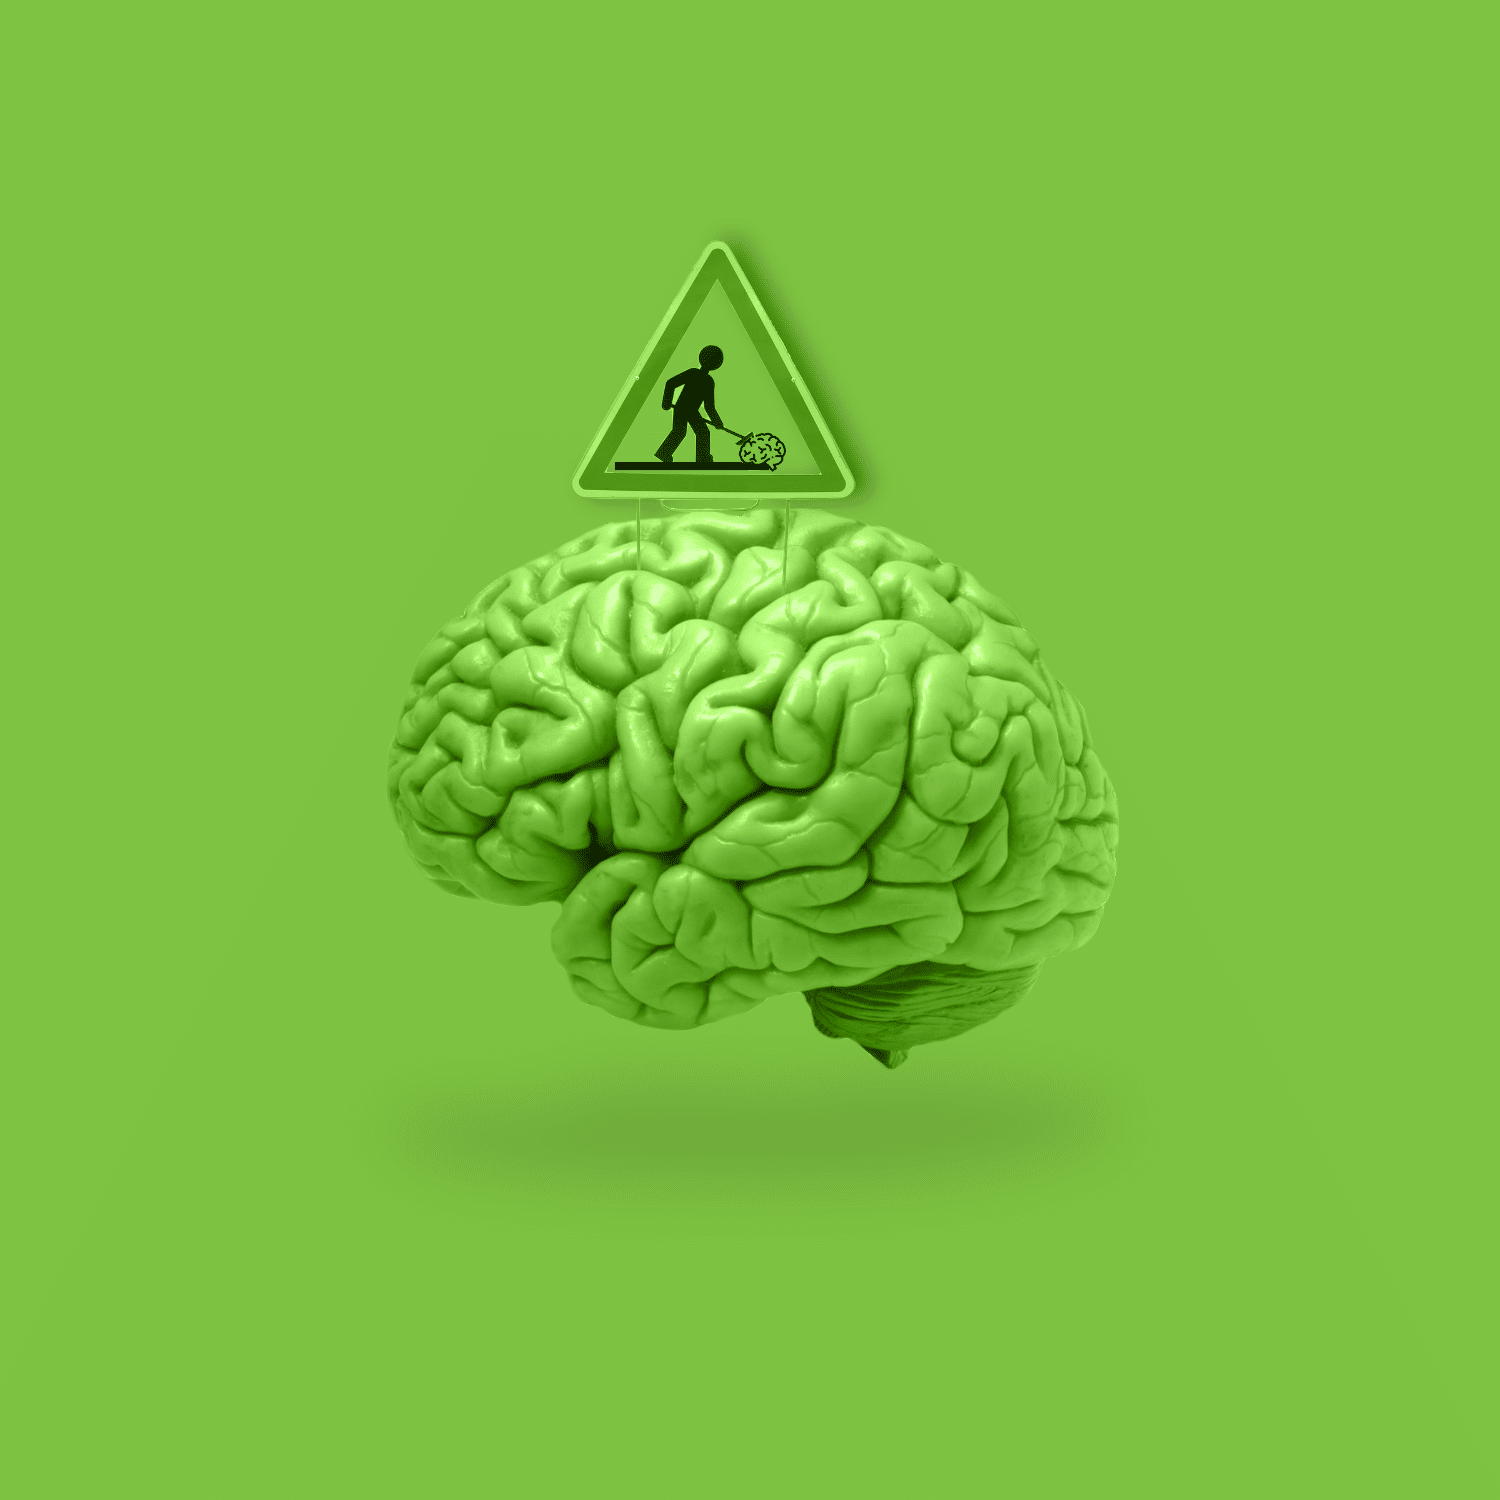 Caution: emotion- the brain